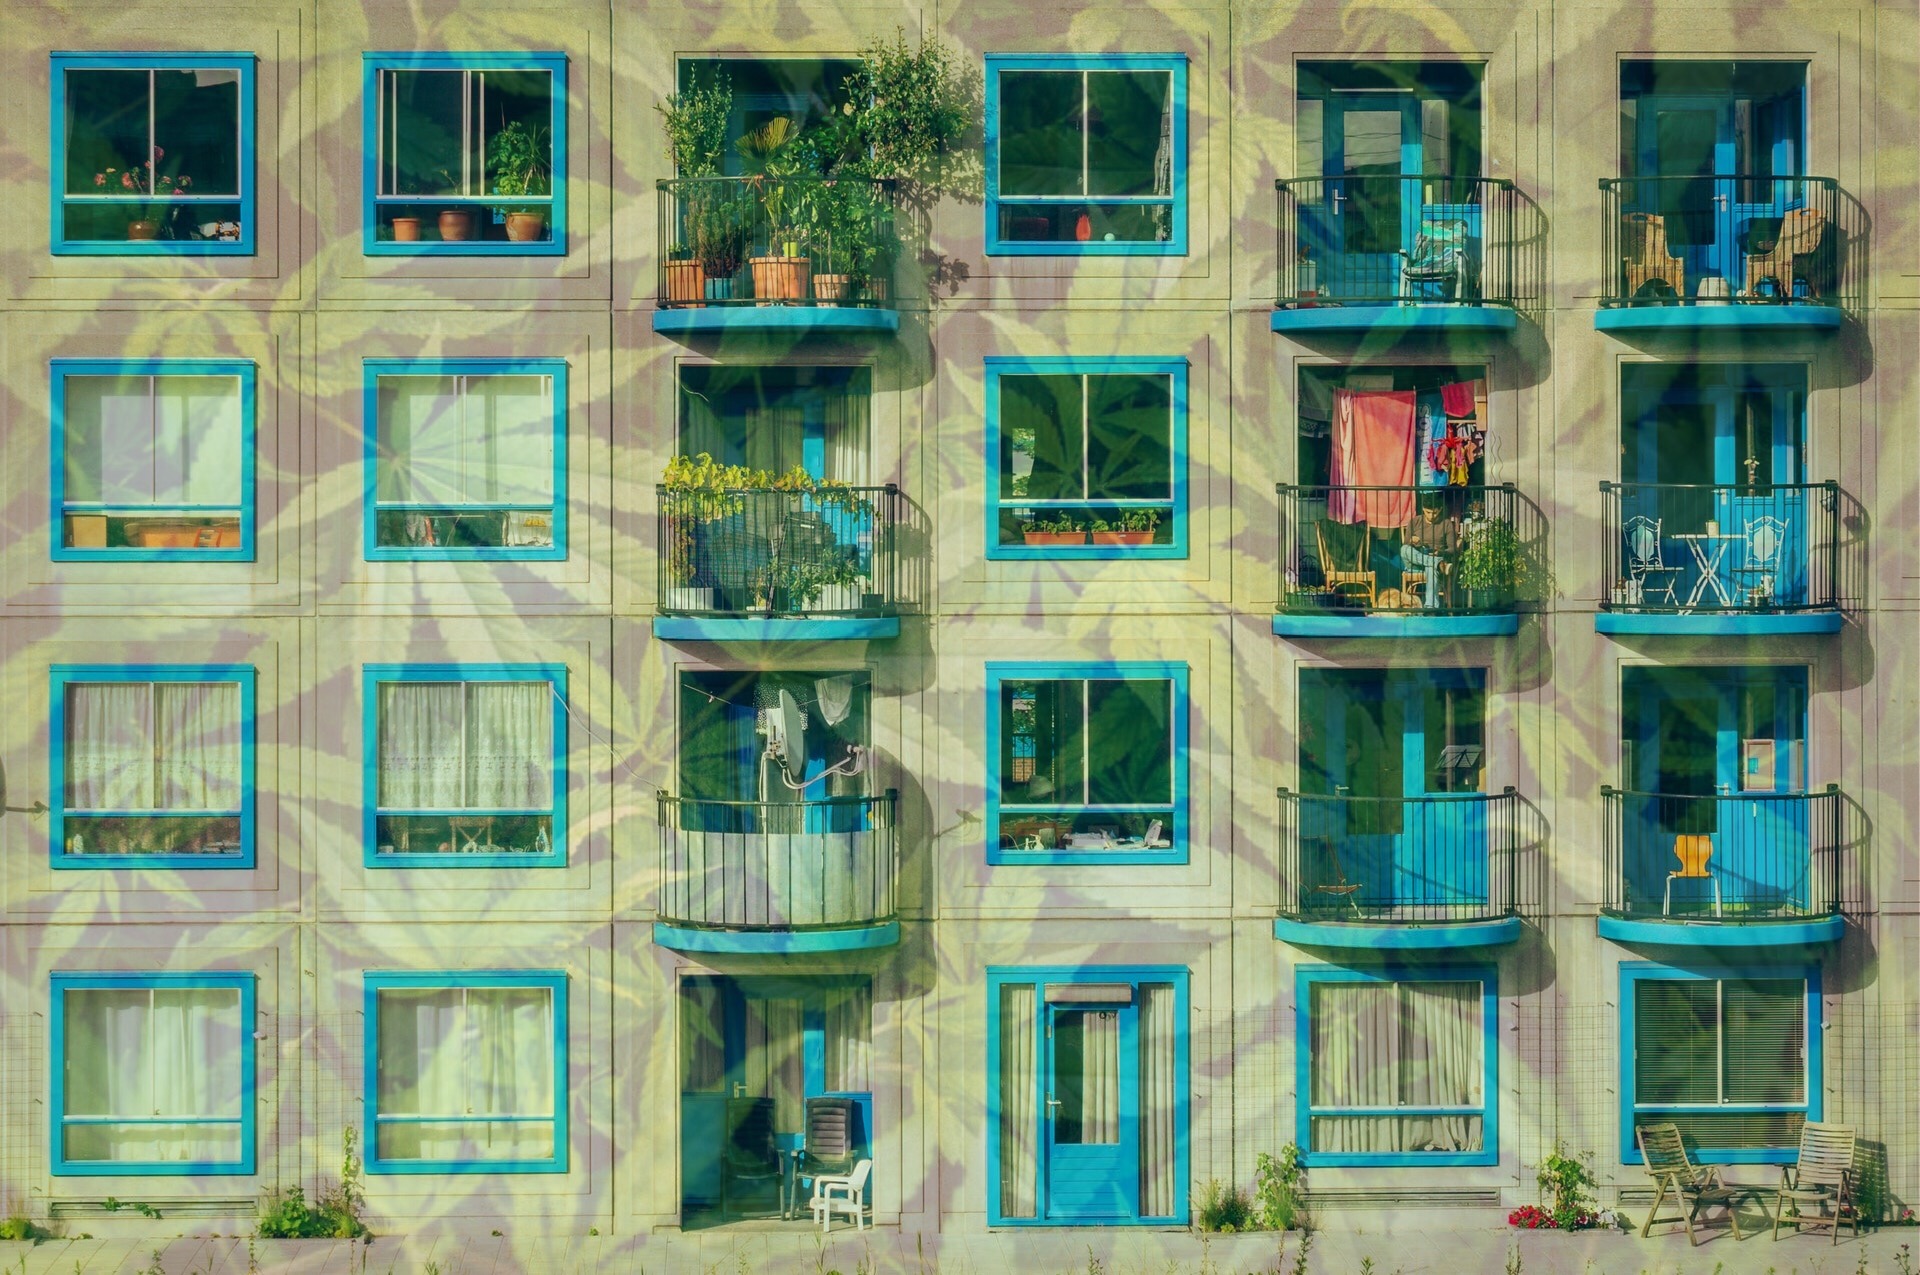 Multi-Unit Housing with overlay of Marijuana